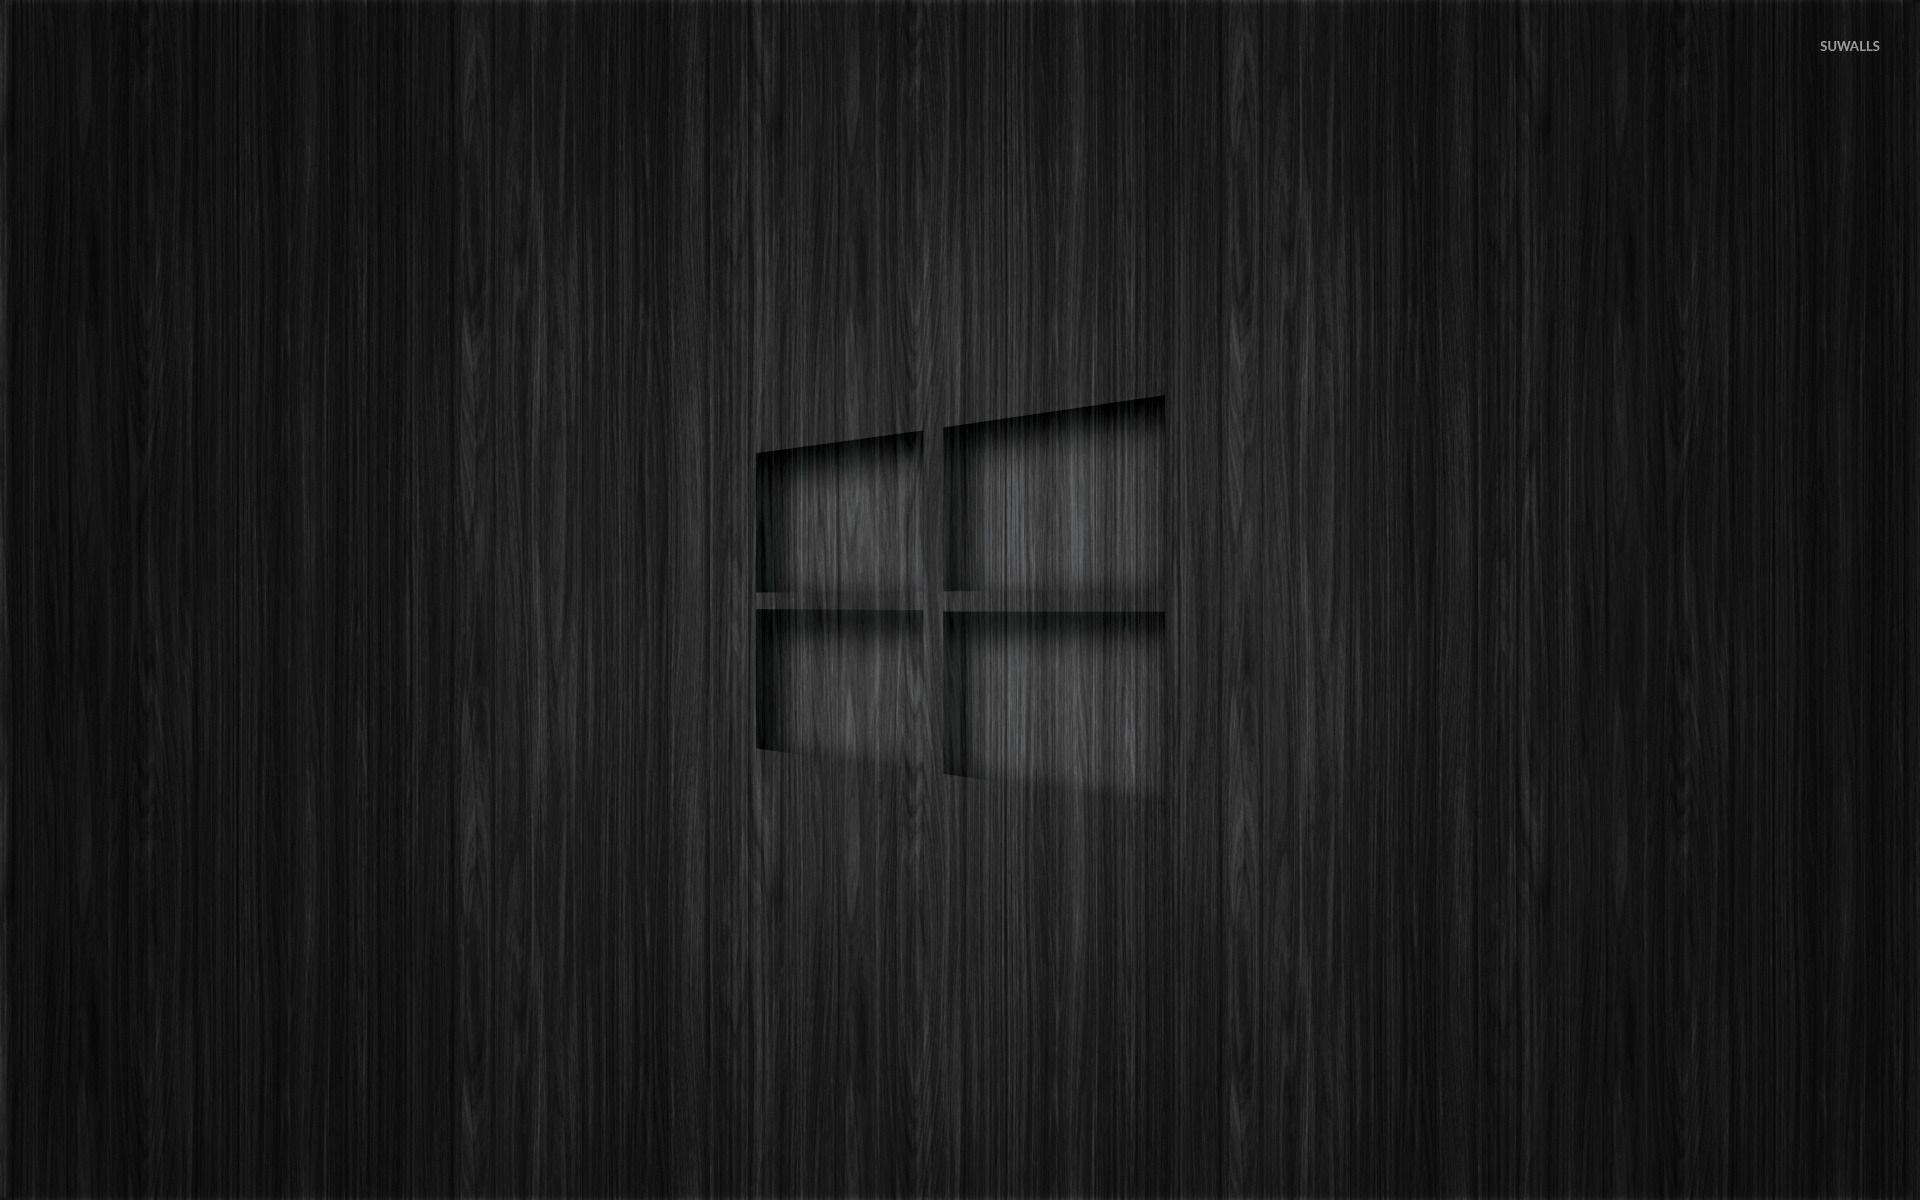 Dark Windows Logo - Windows 10 transparent logo on dark wood wallpaper